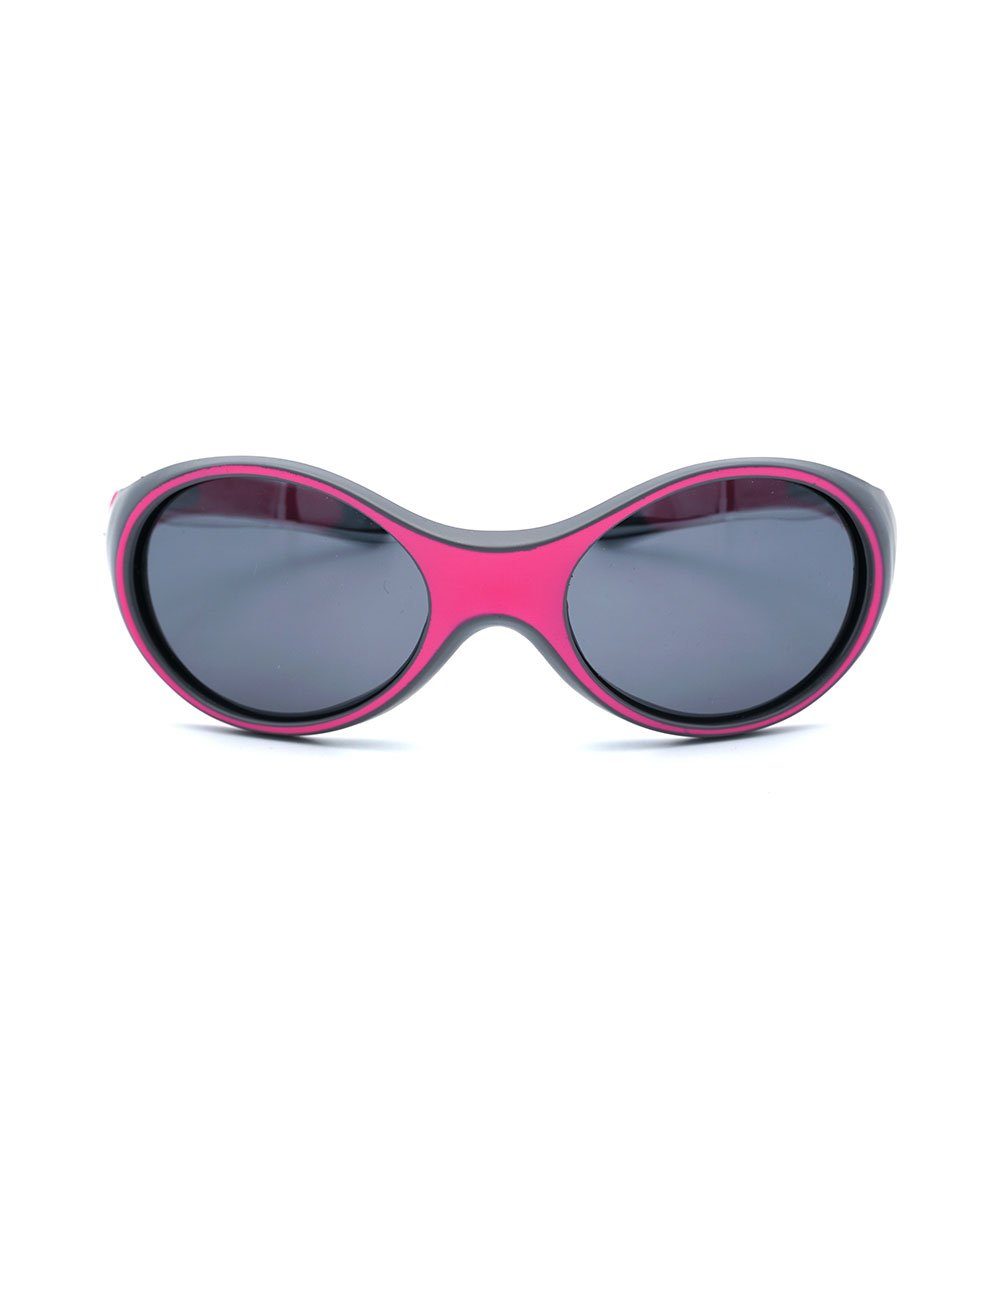 MAXIMO Sonnenbrille KIDS-Sonnenbrille 'sporty' inkl.Box,Microfaserb. pink/dark grey